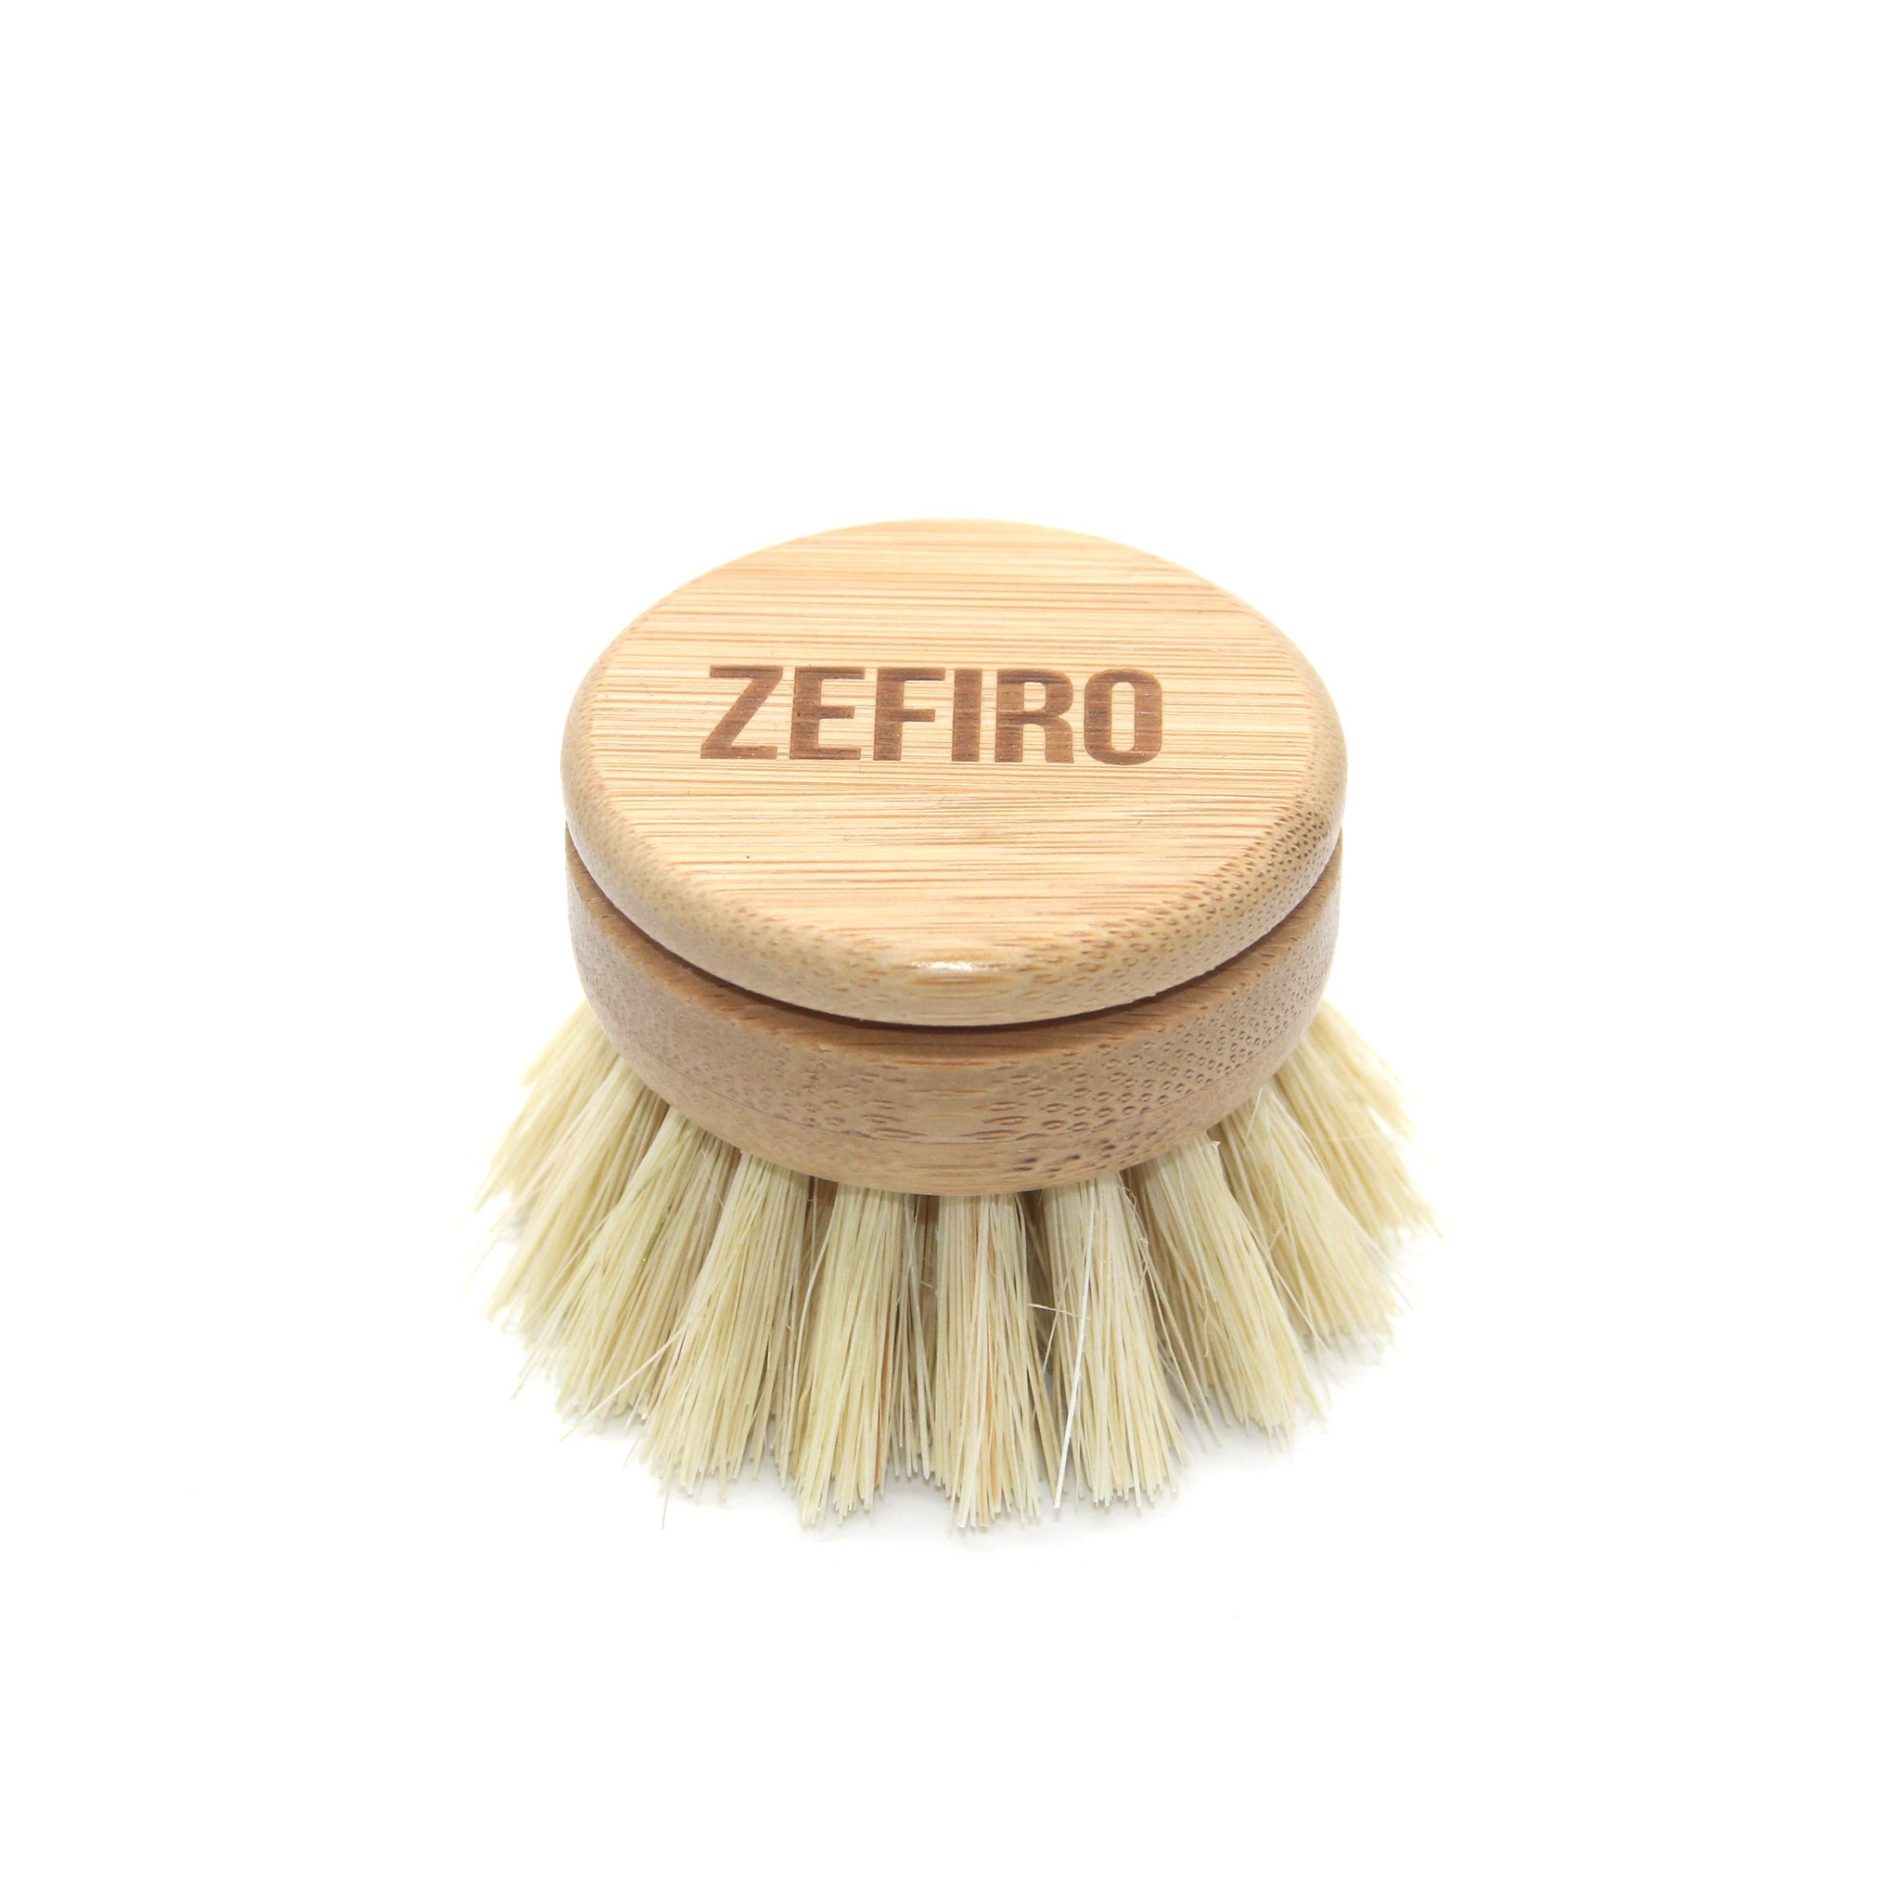 https://ecogirlshop.com/wp-content/uploads/2019/10/zefiro-dish-brush-replacement-heads-scaled.jpg